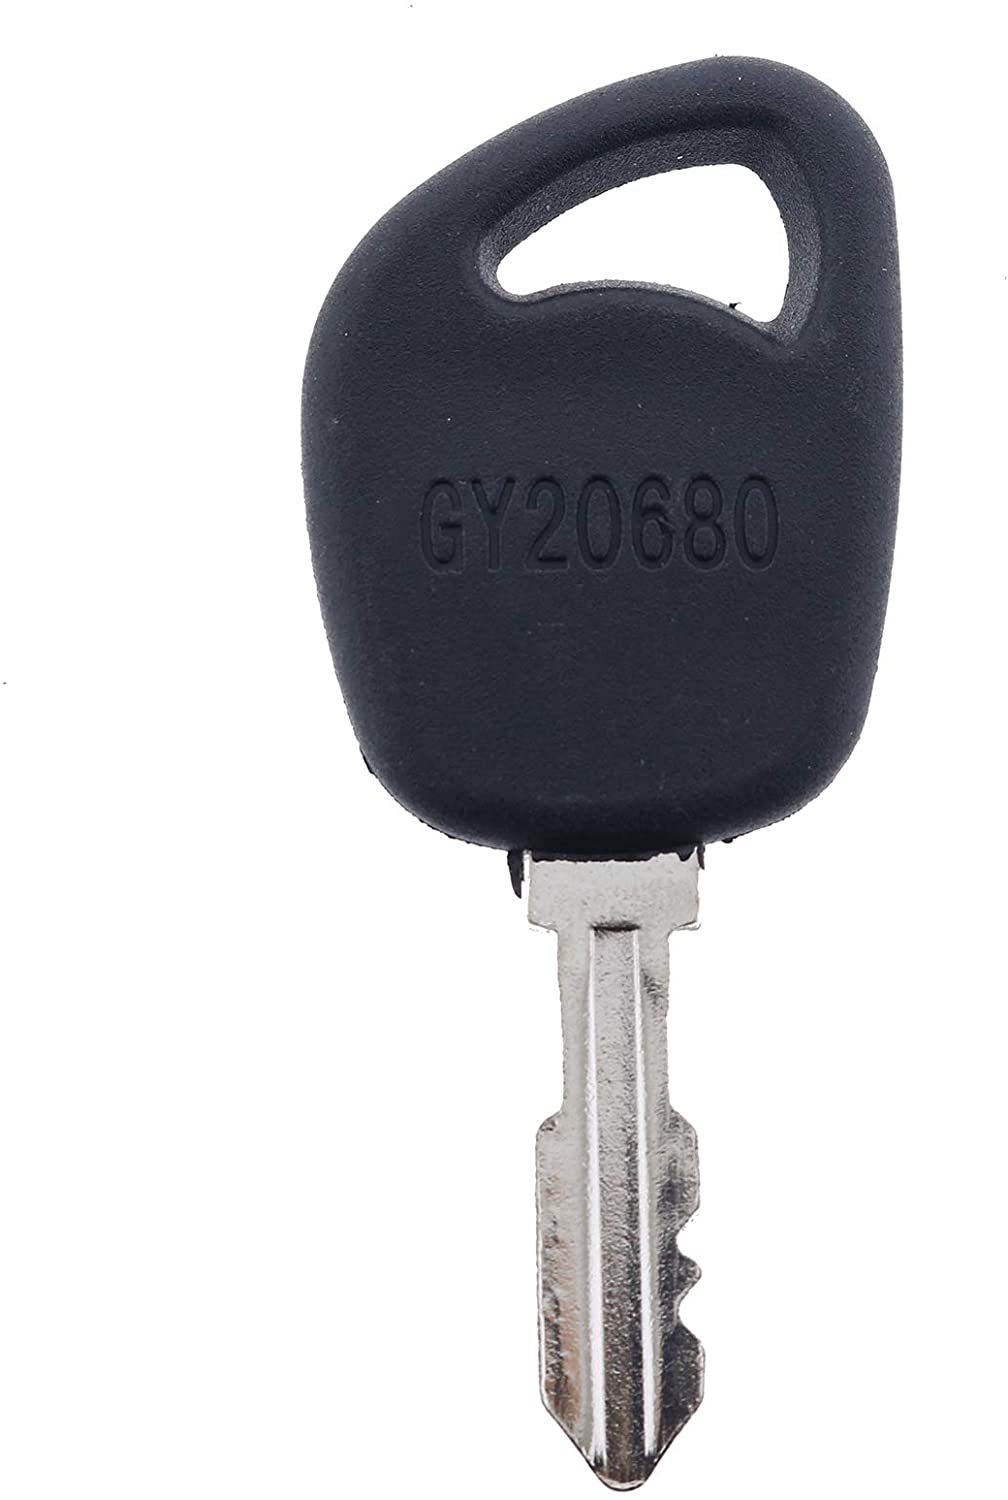 5X Ignition Key with Key Chain AM131946 AM135345 M153650 GY20680 GX24332 for John Deere D100 D105 D110 D120 D130 D140 D150 D155 D160 D170 AYP Husqvarna Poulan Roper Craftsman - KUDUPARTS